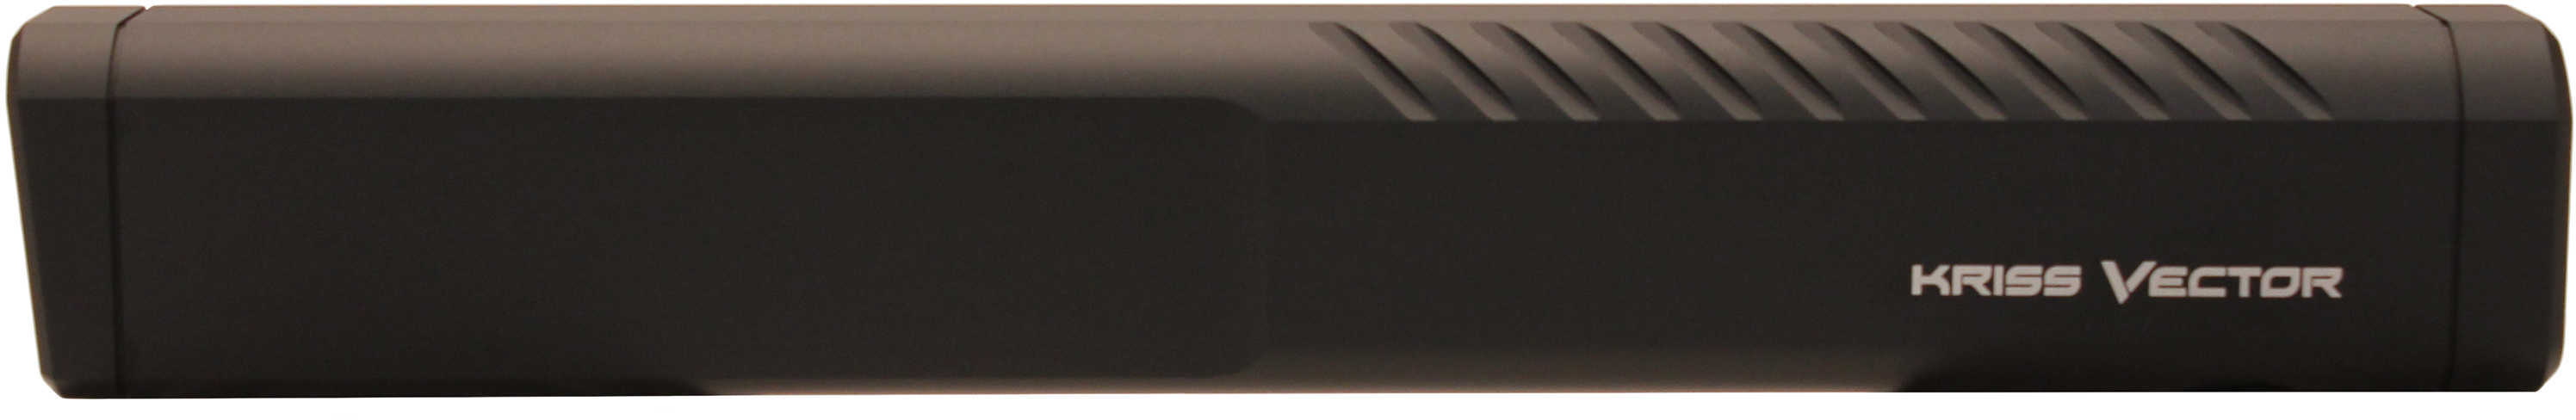 KRISS 16" Vector CRB Enhanced Shroud, Black Md: KVA-CSSBL16